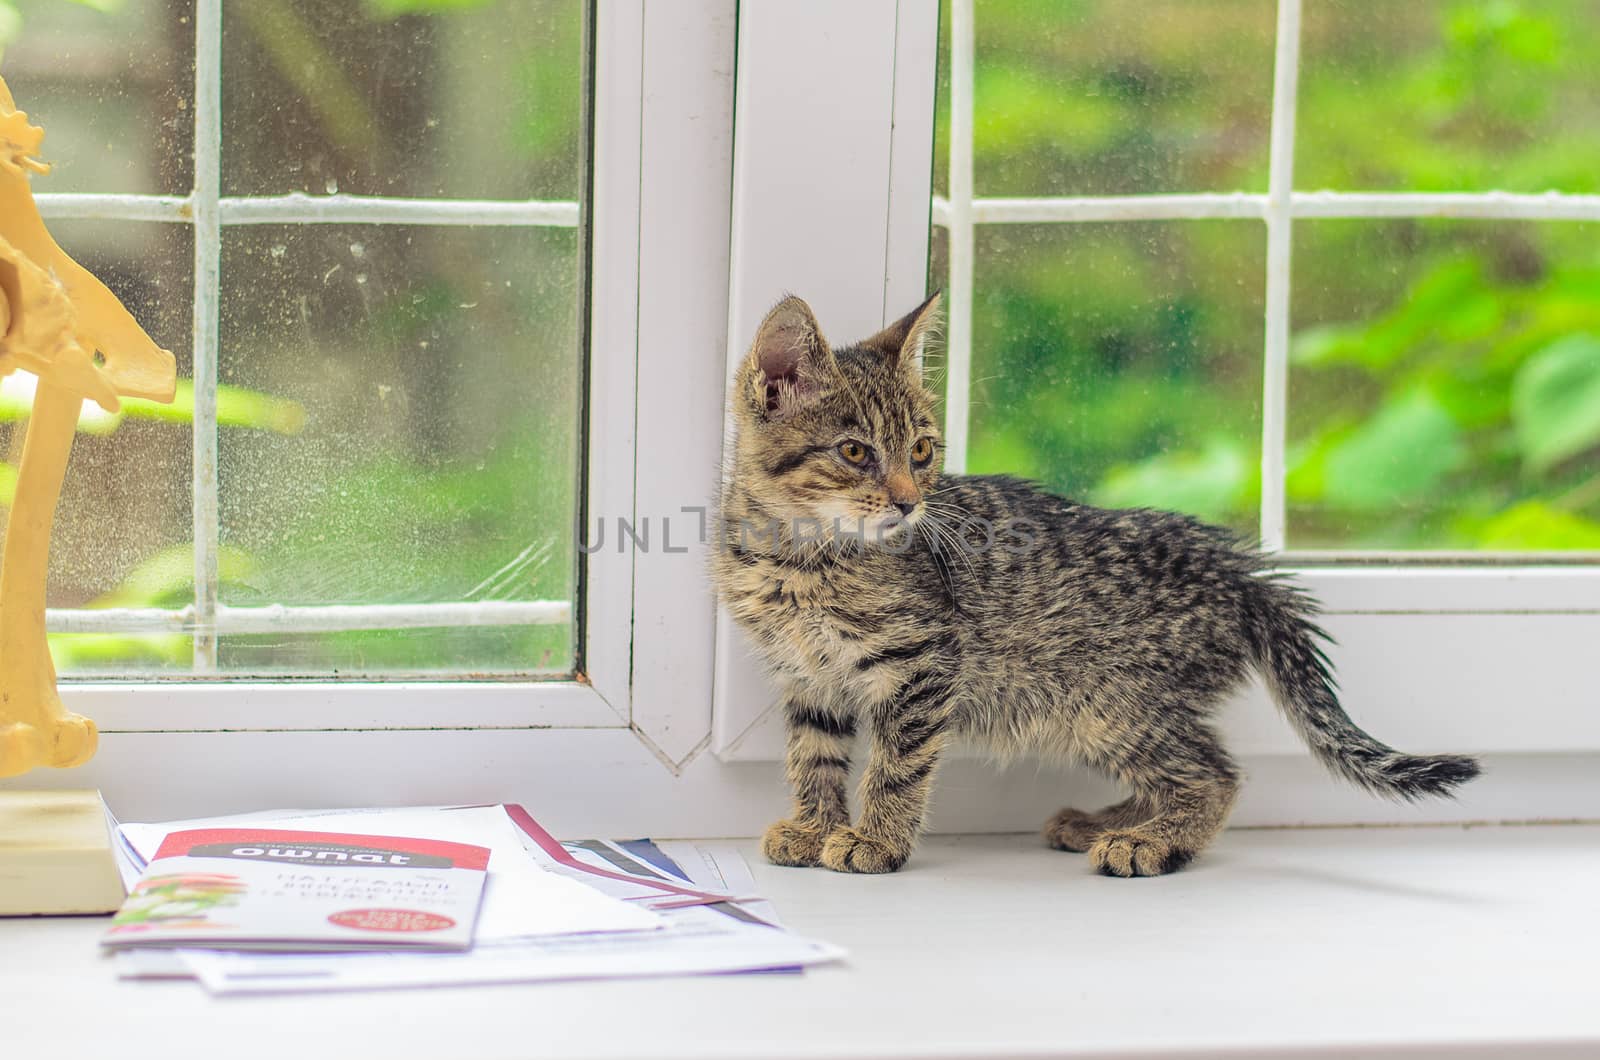 Little gray kitten at the window by chernobrovin